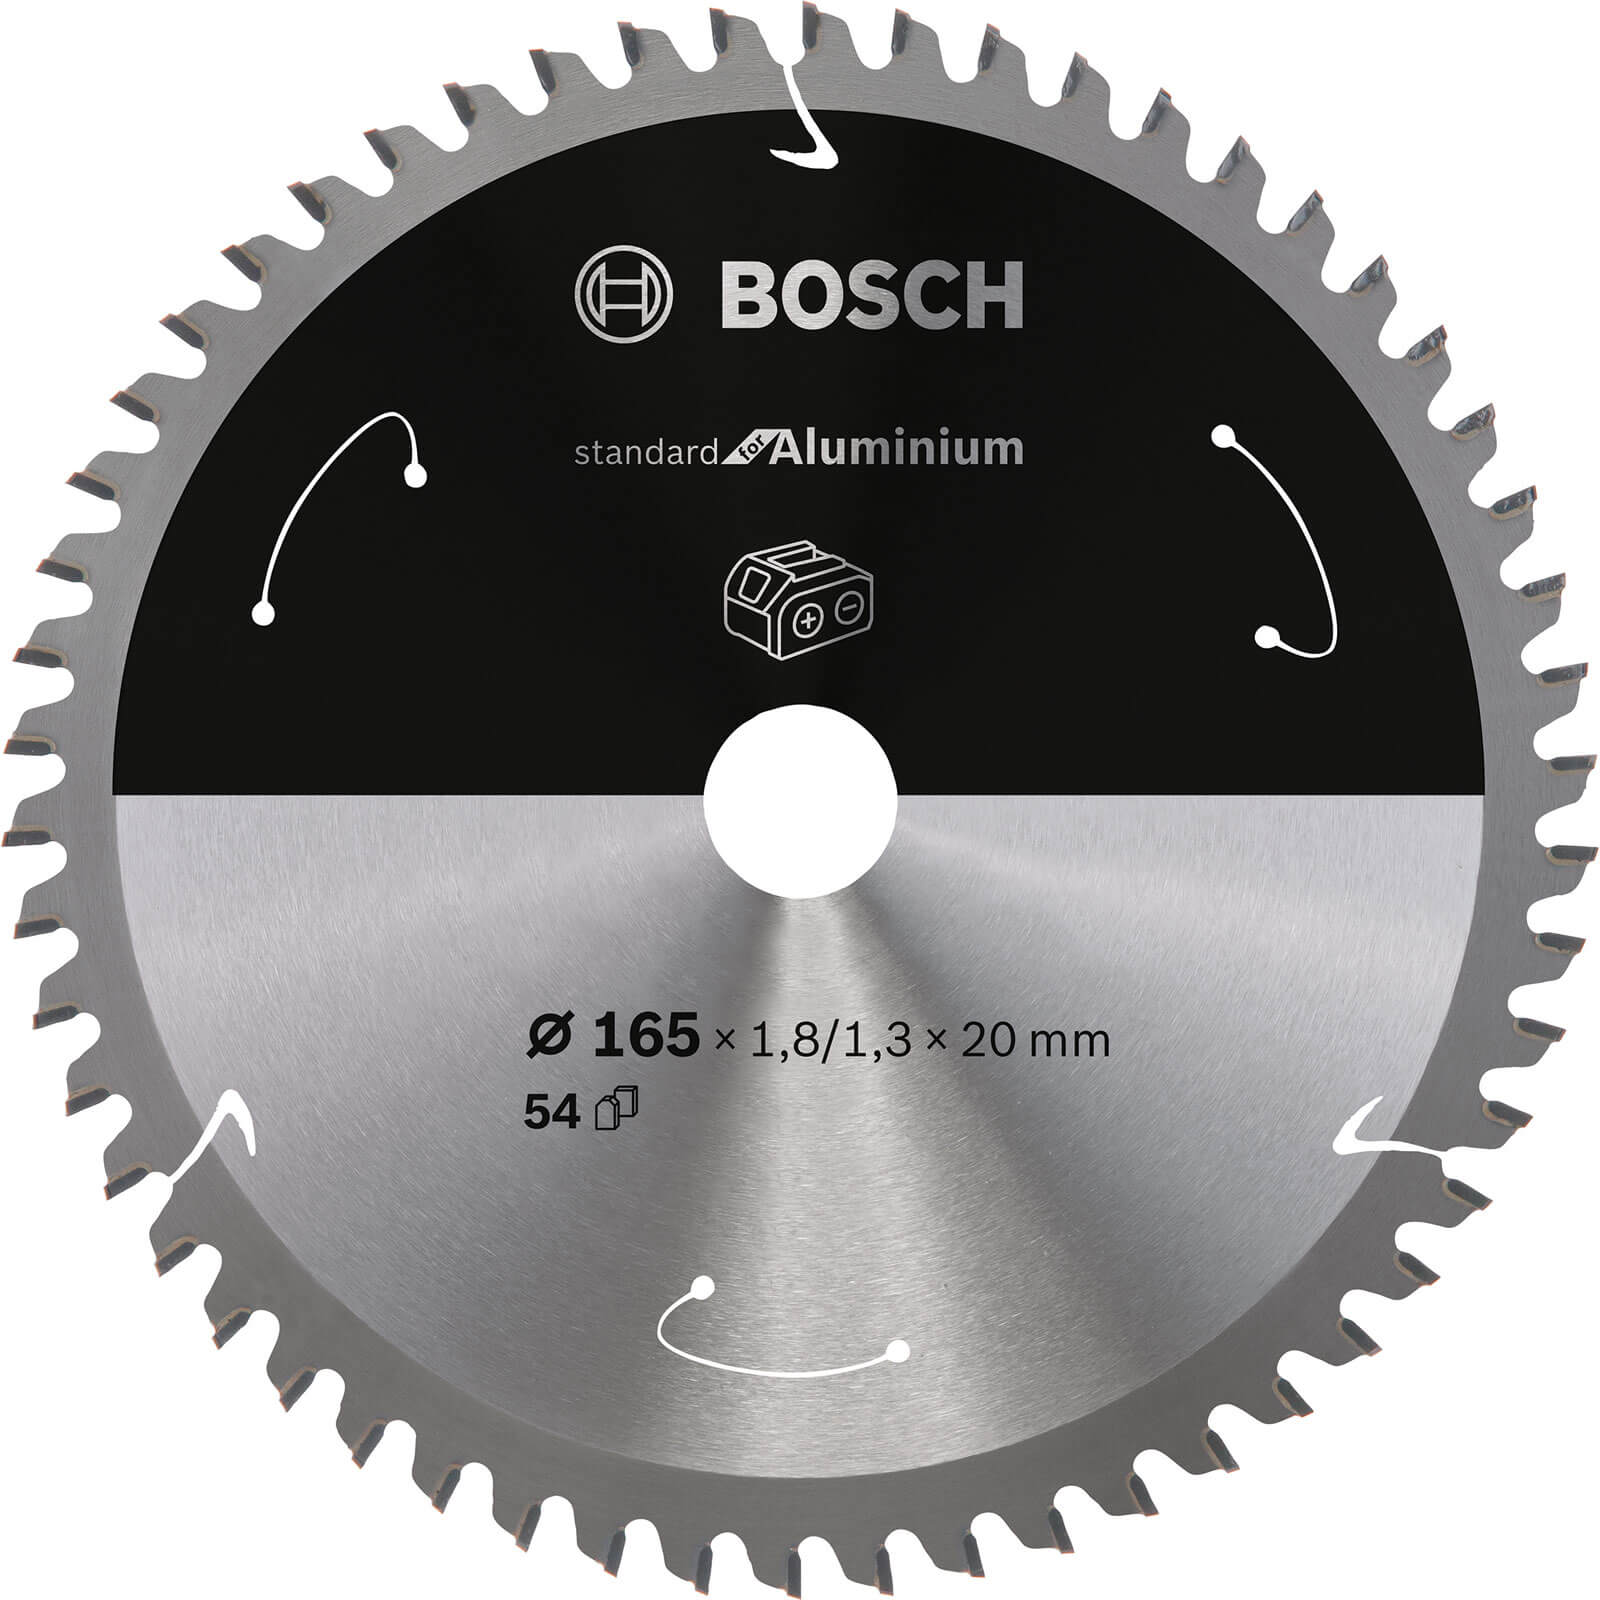 Bosch Cordless Circular Saw Blade for Aluminium 165mm 54T 20mm